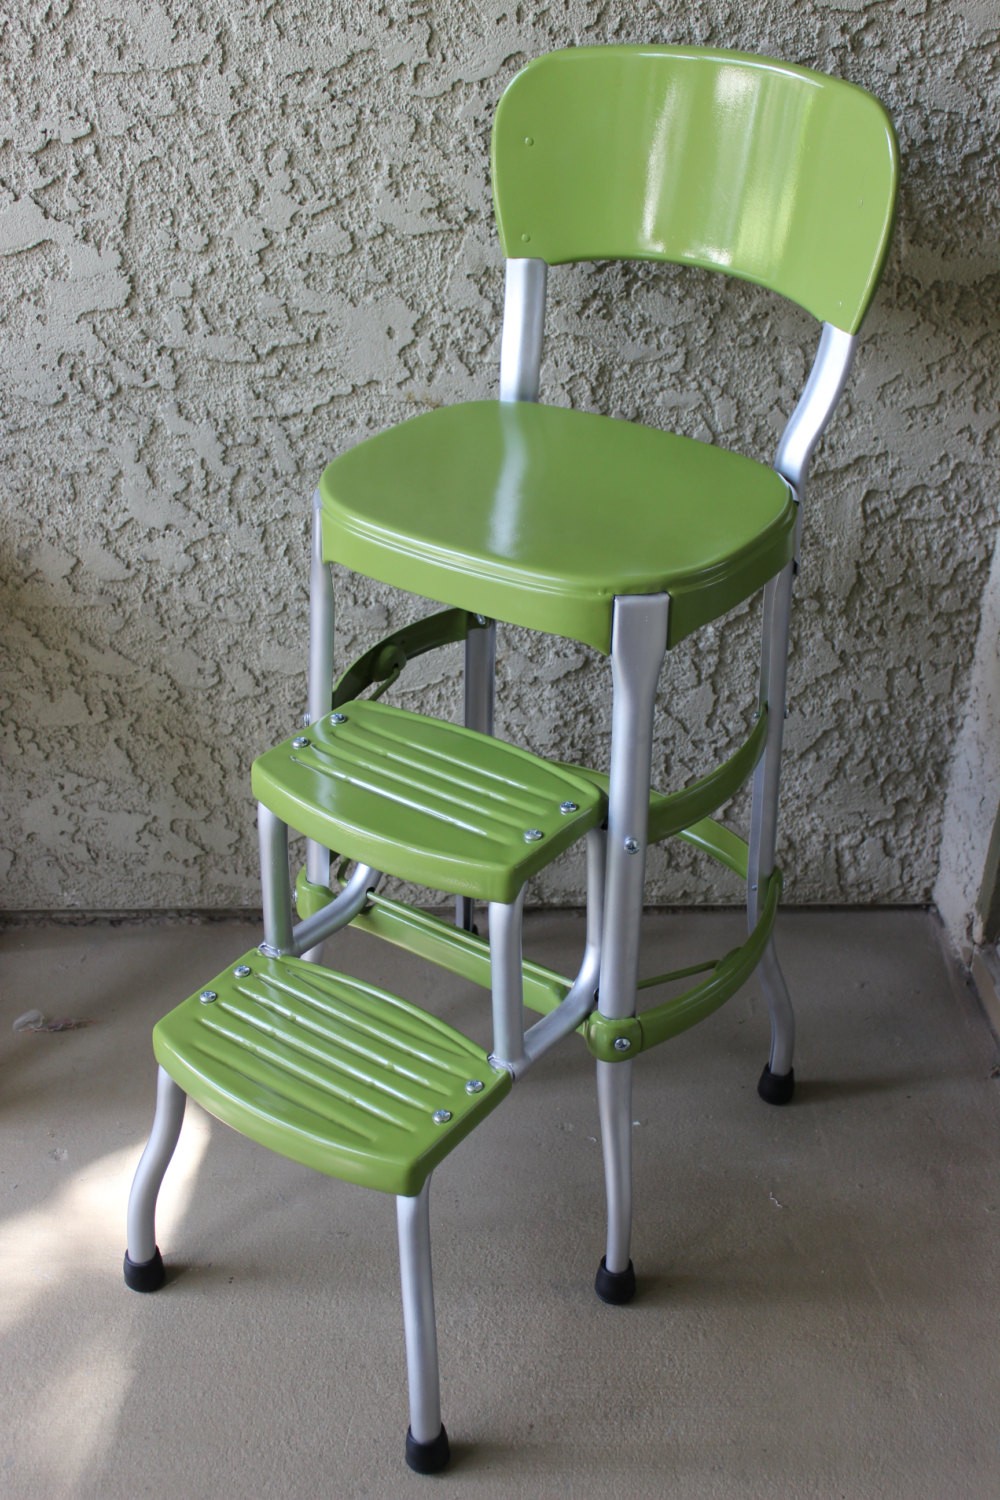 Vintage green cosco step stool